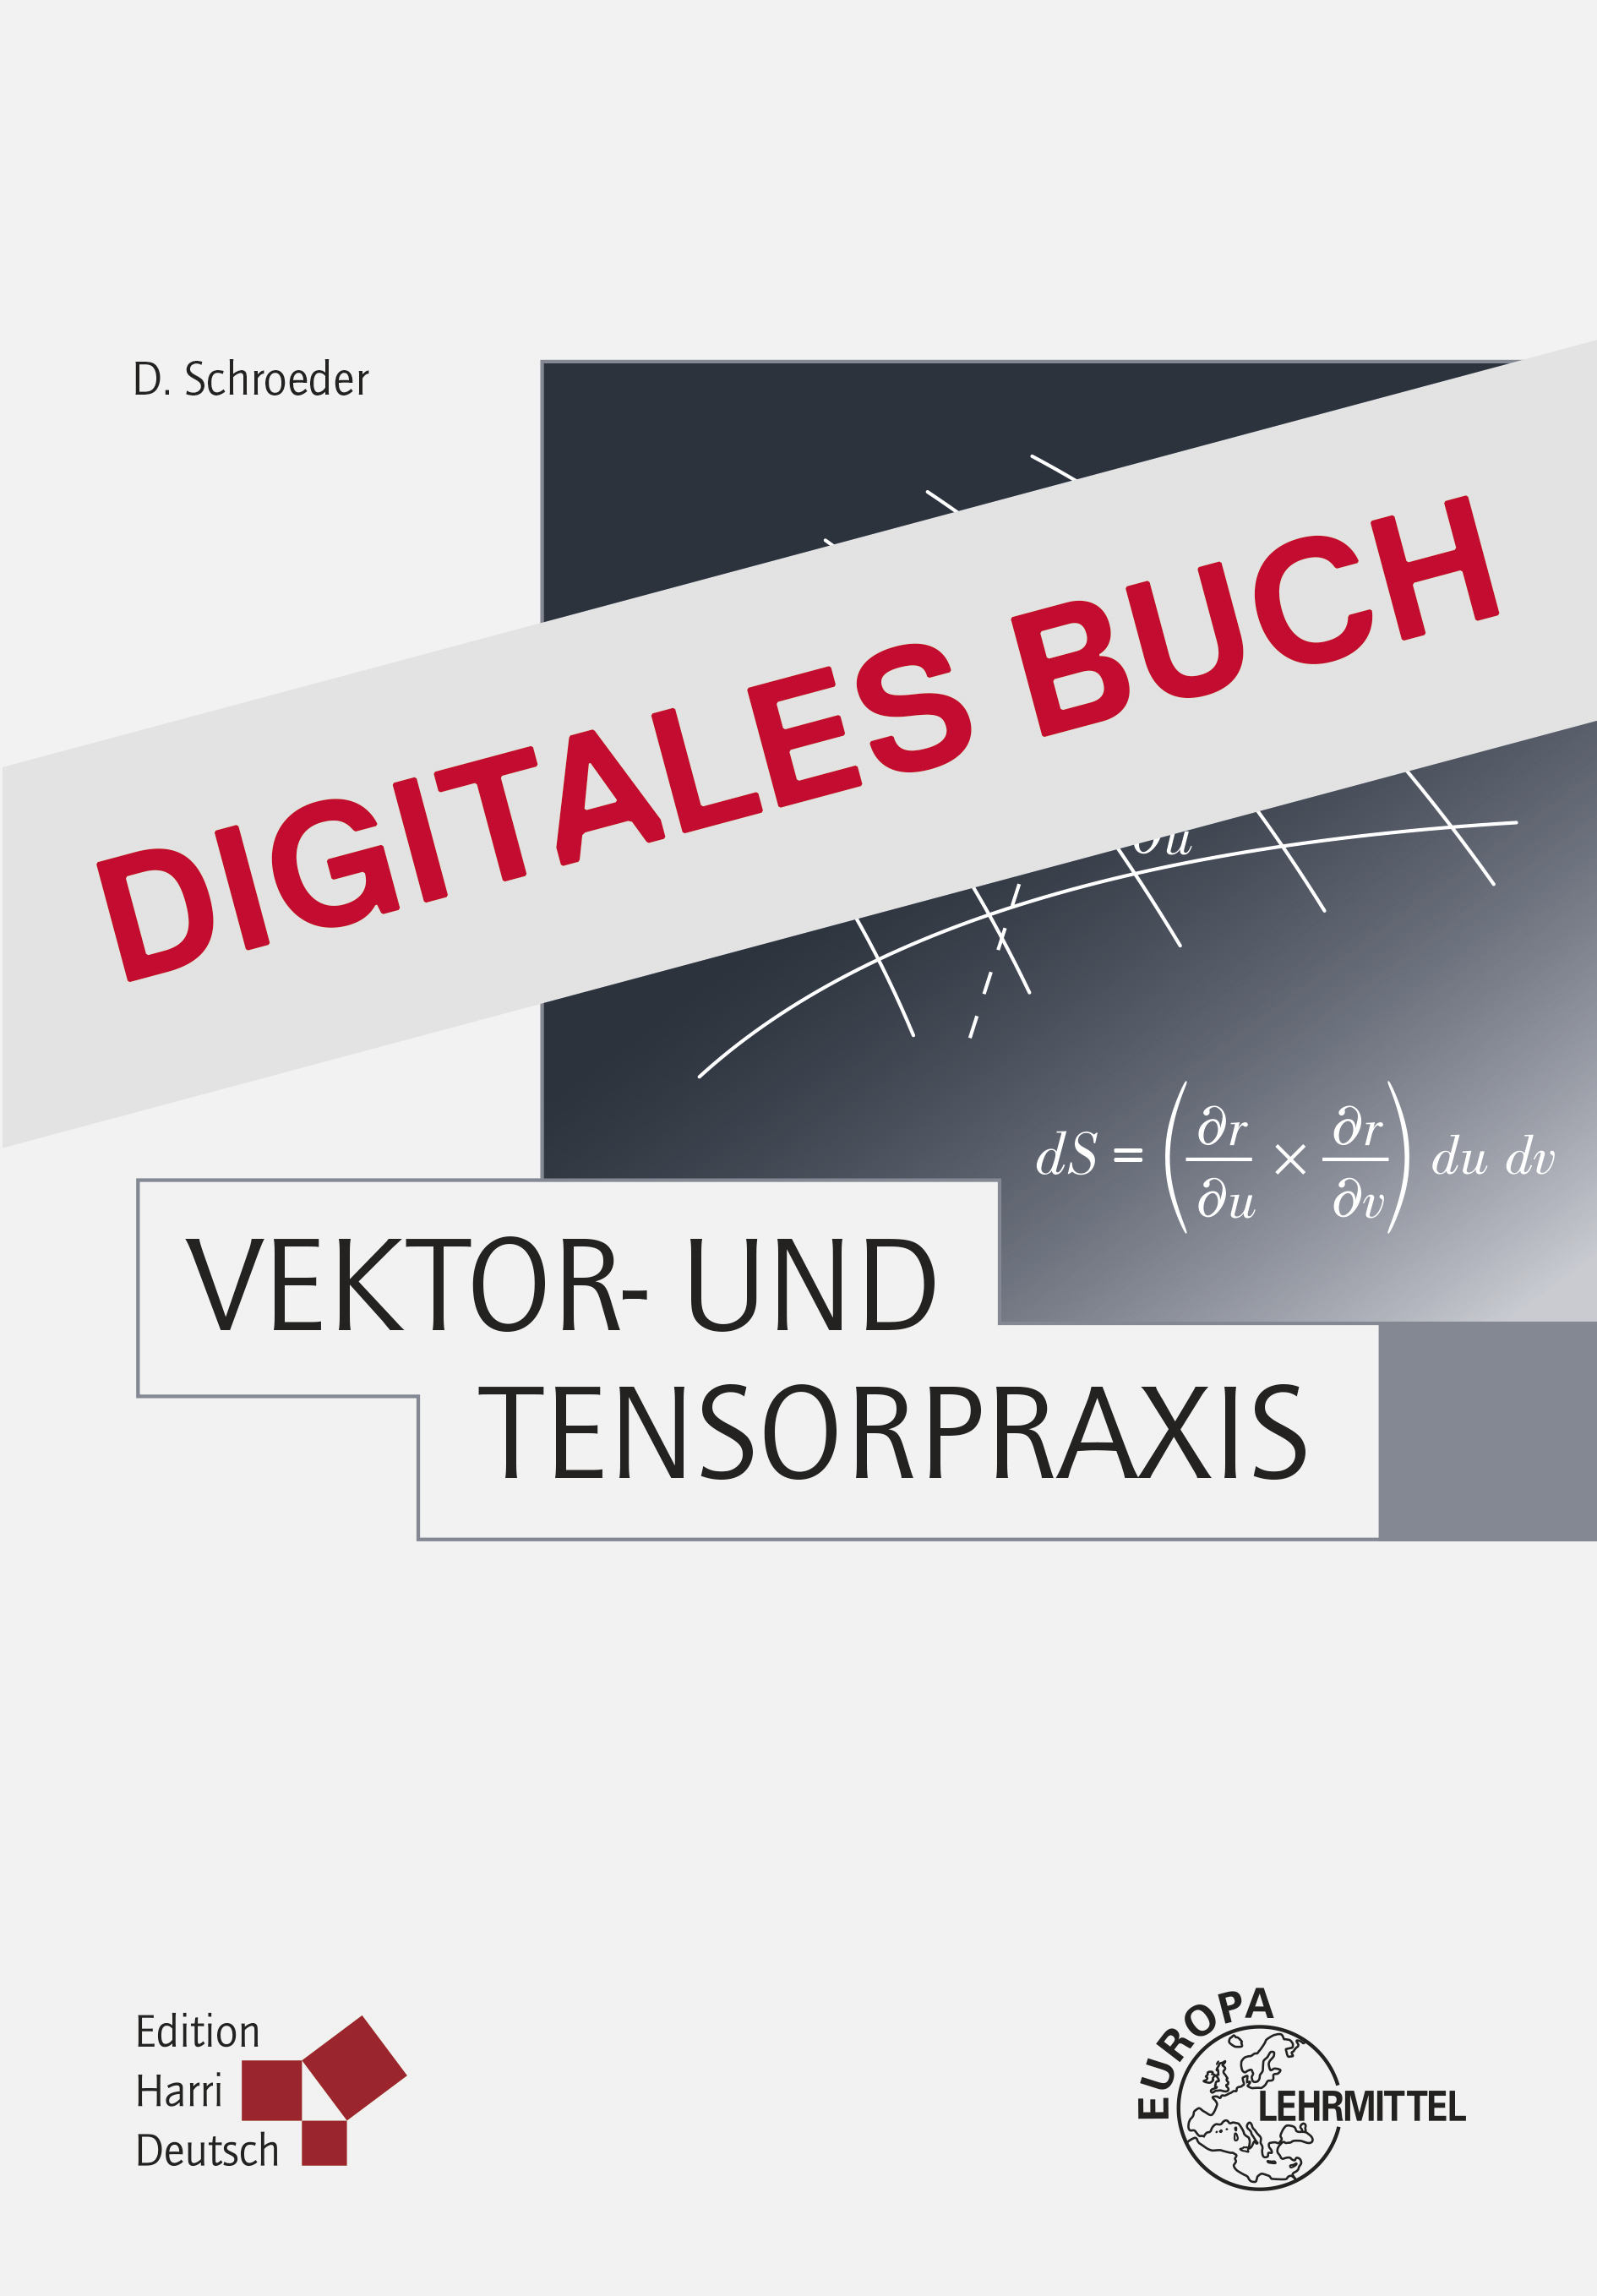 Vektor- und Tensorpraxis - Digitales Buch